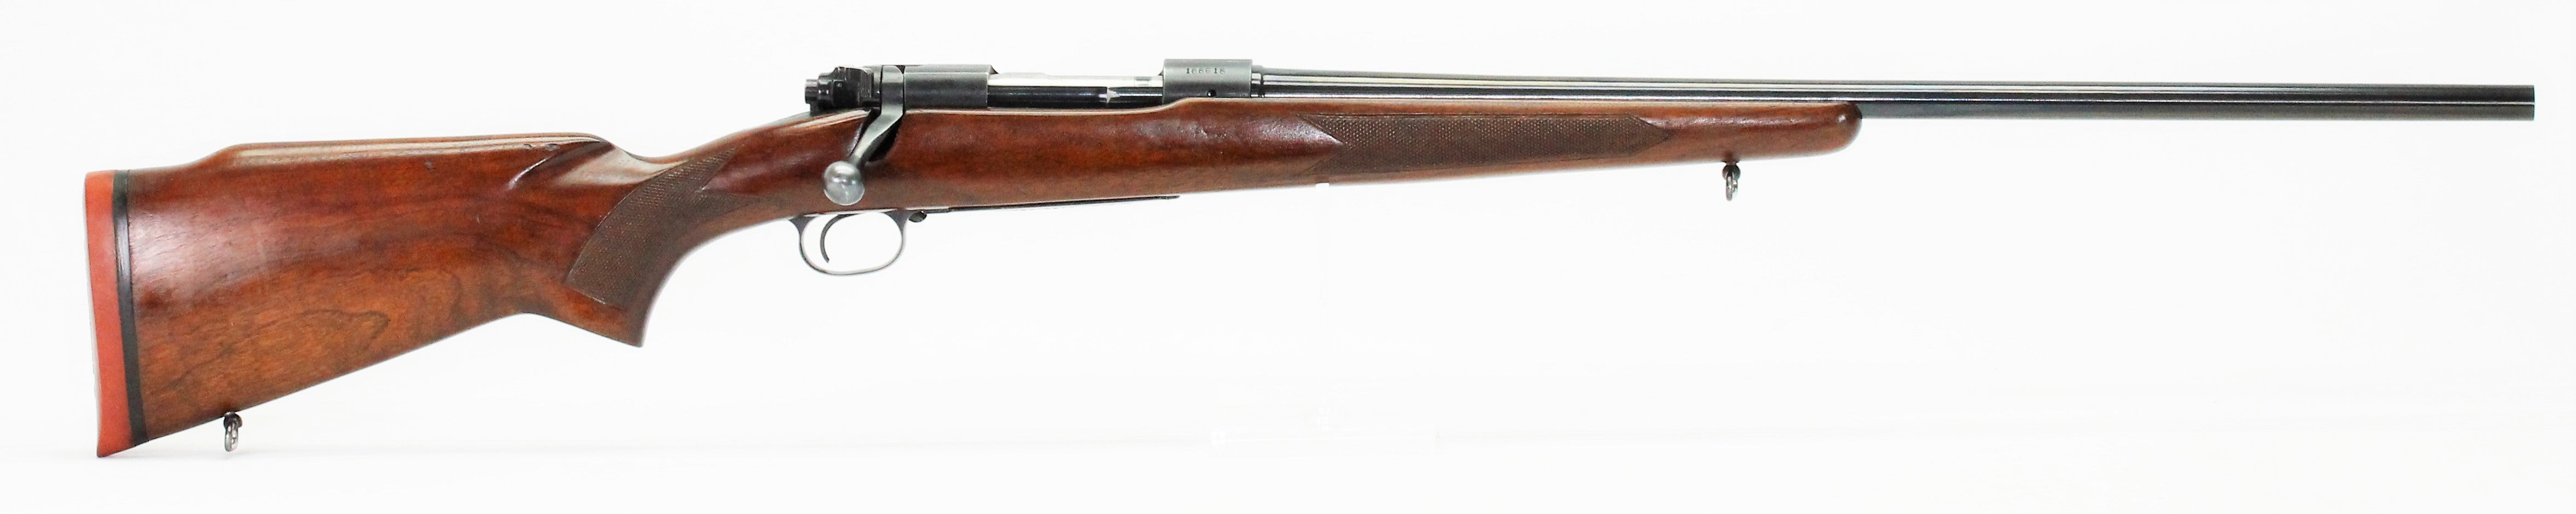 Custom Rifle Build - .30-06 24-inch Featherweight